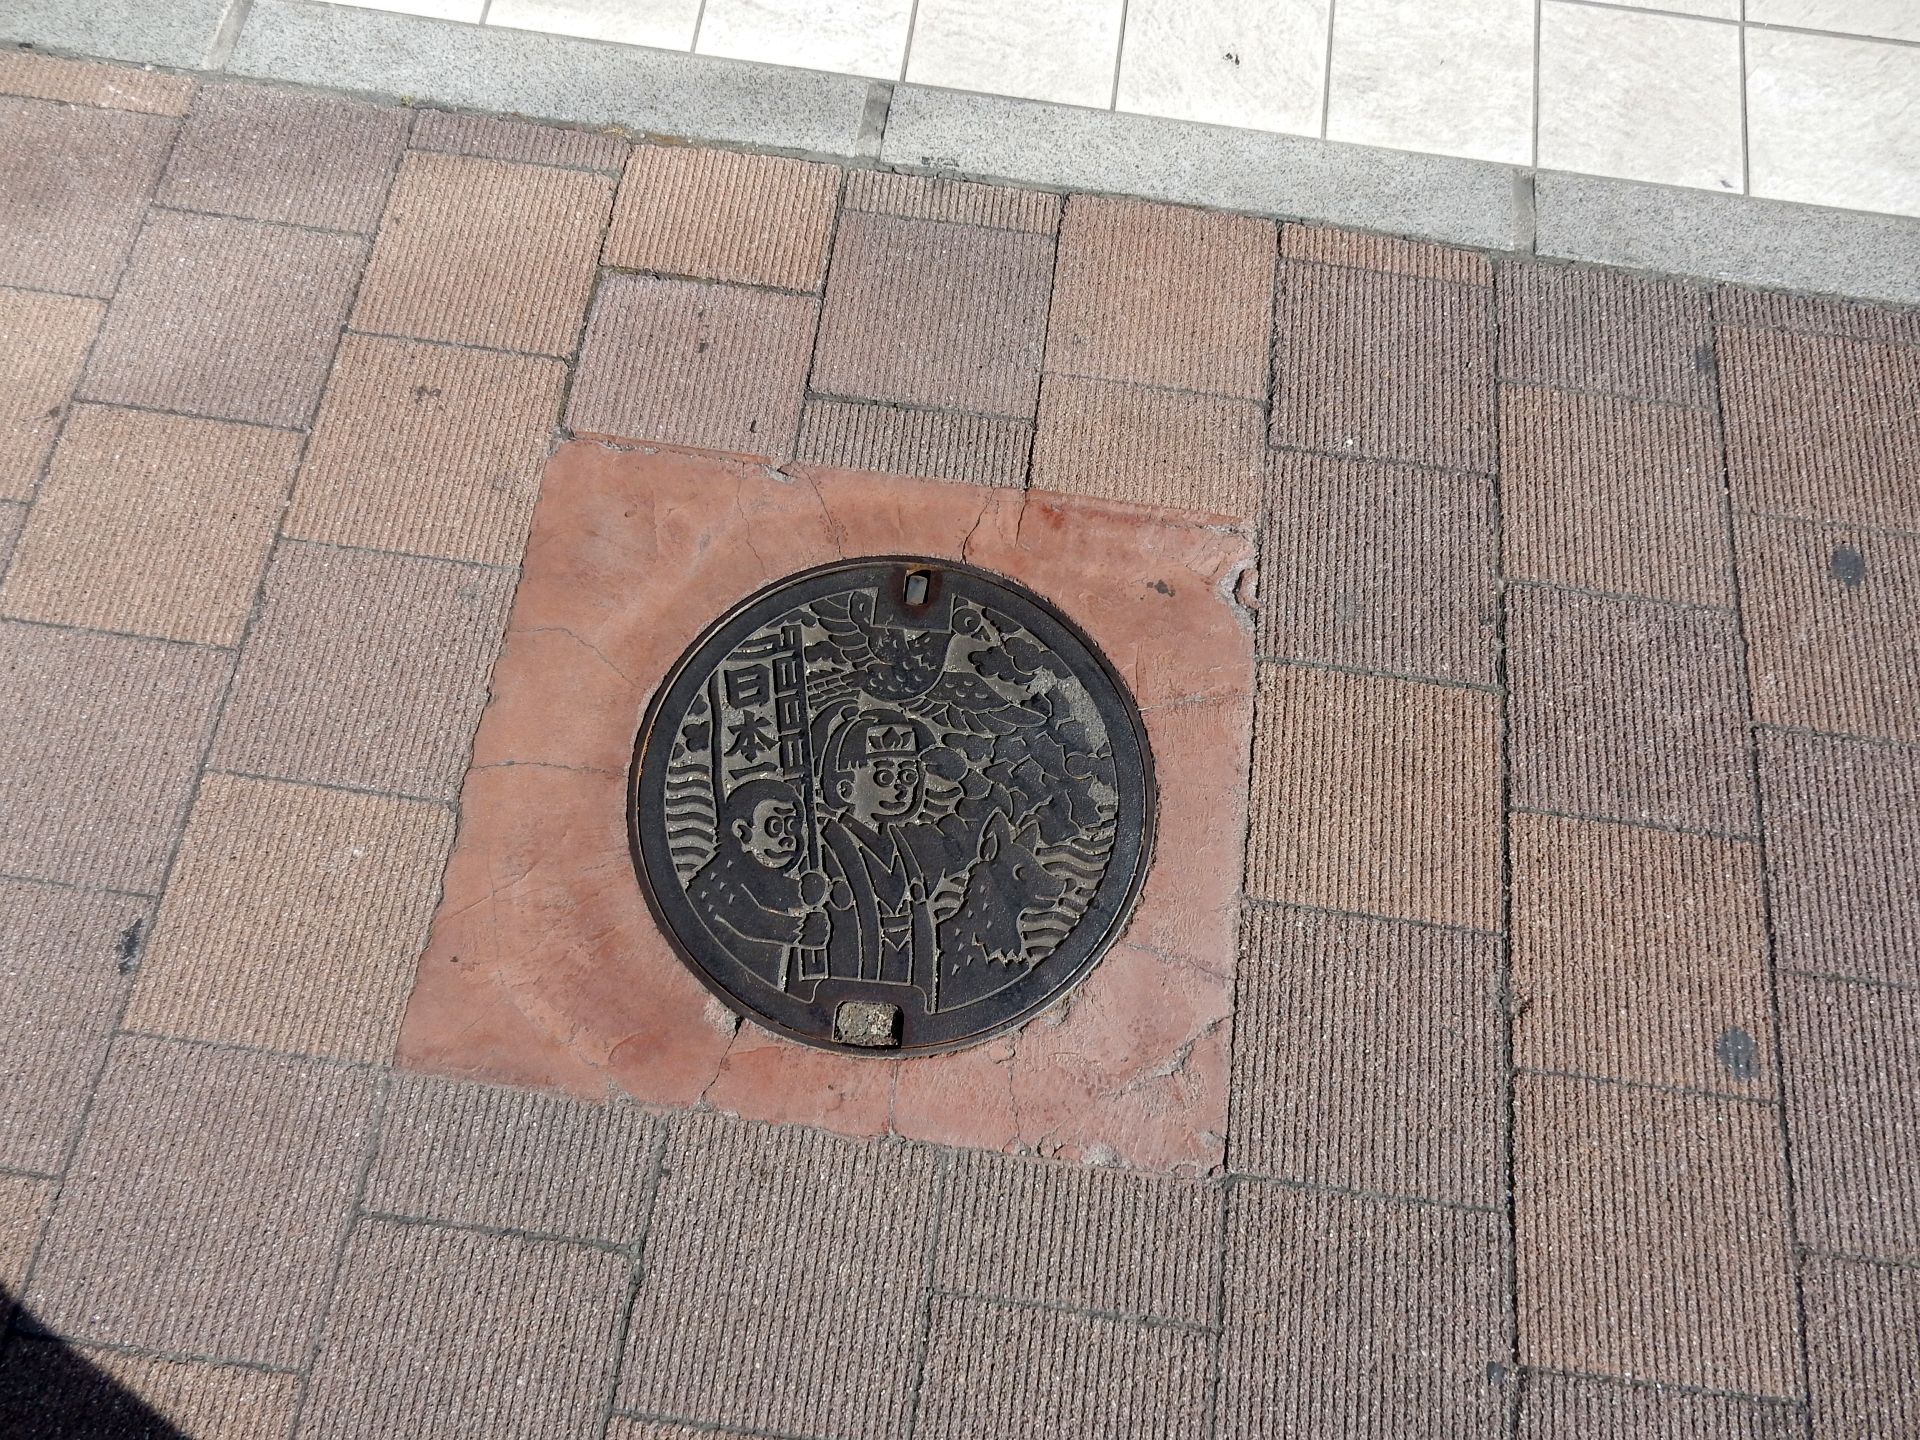 Manhole in Matsue city